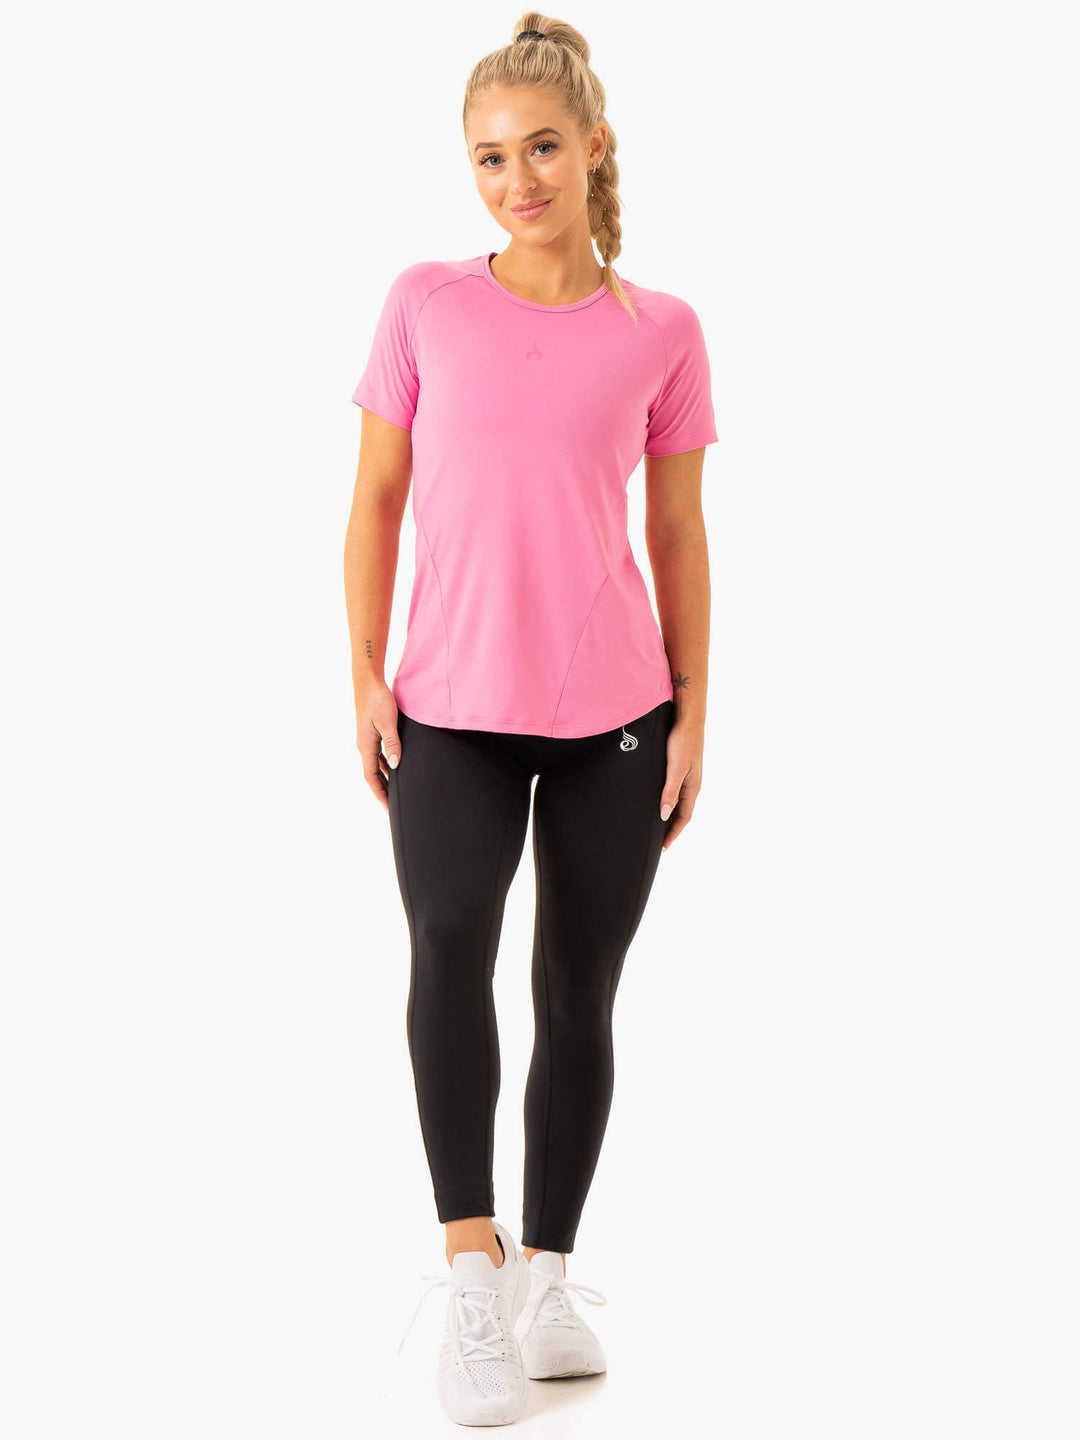 Level Up Training T-Shirt - Pink Clothing Ryderwear 